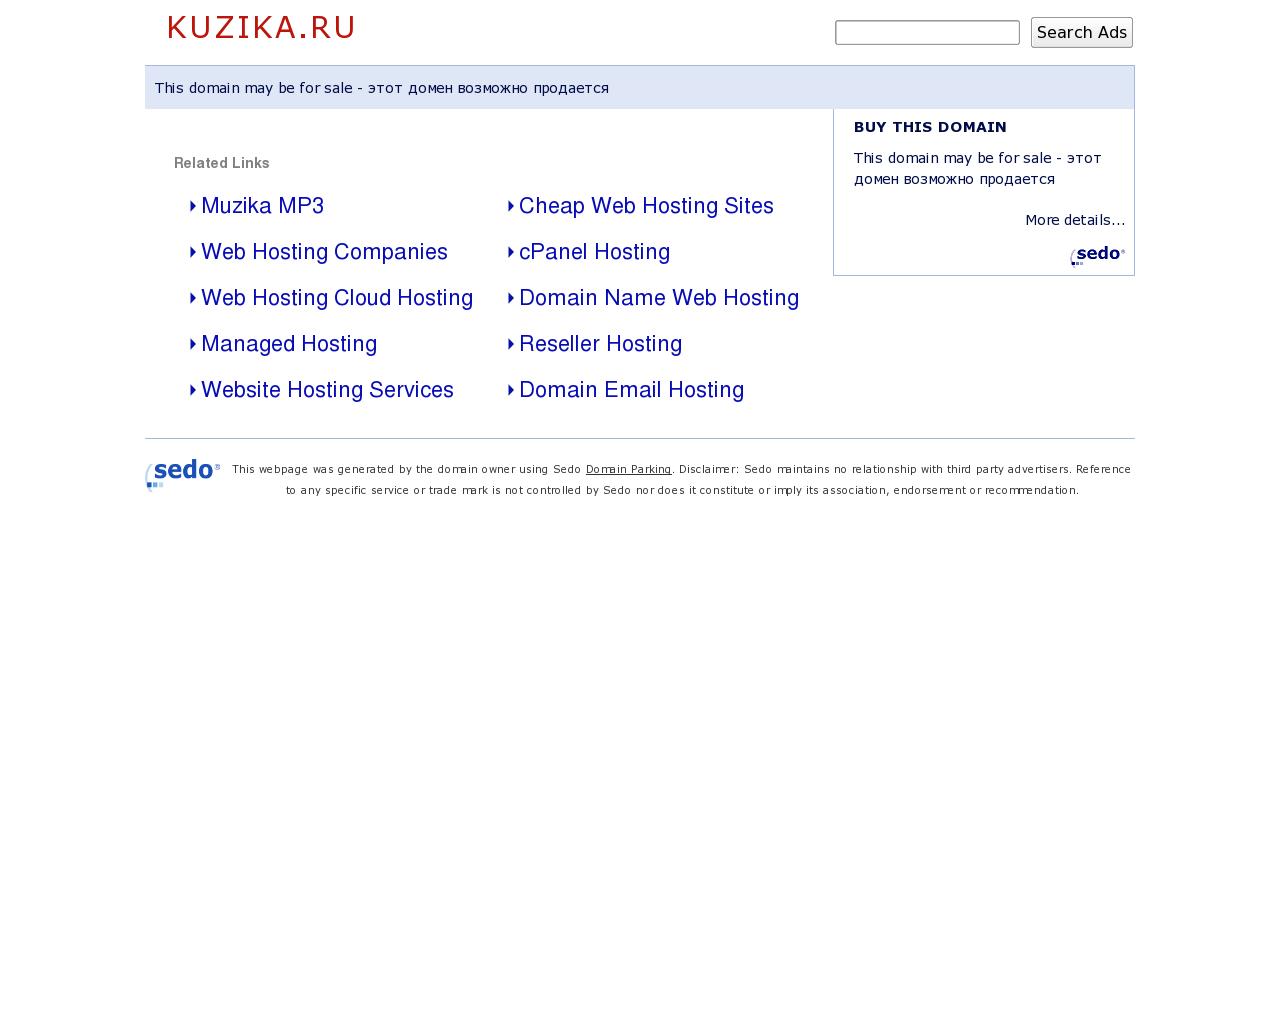 Изображение сайта kuzika.ru в разрешении 1280x1024